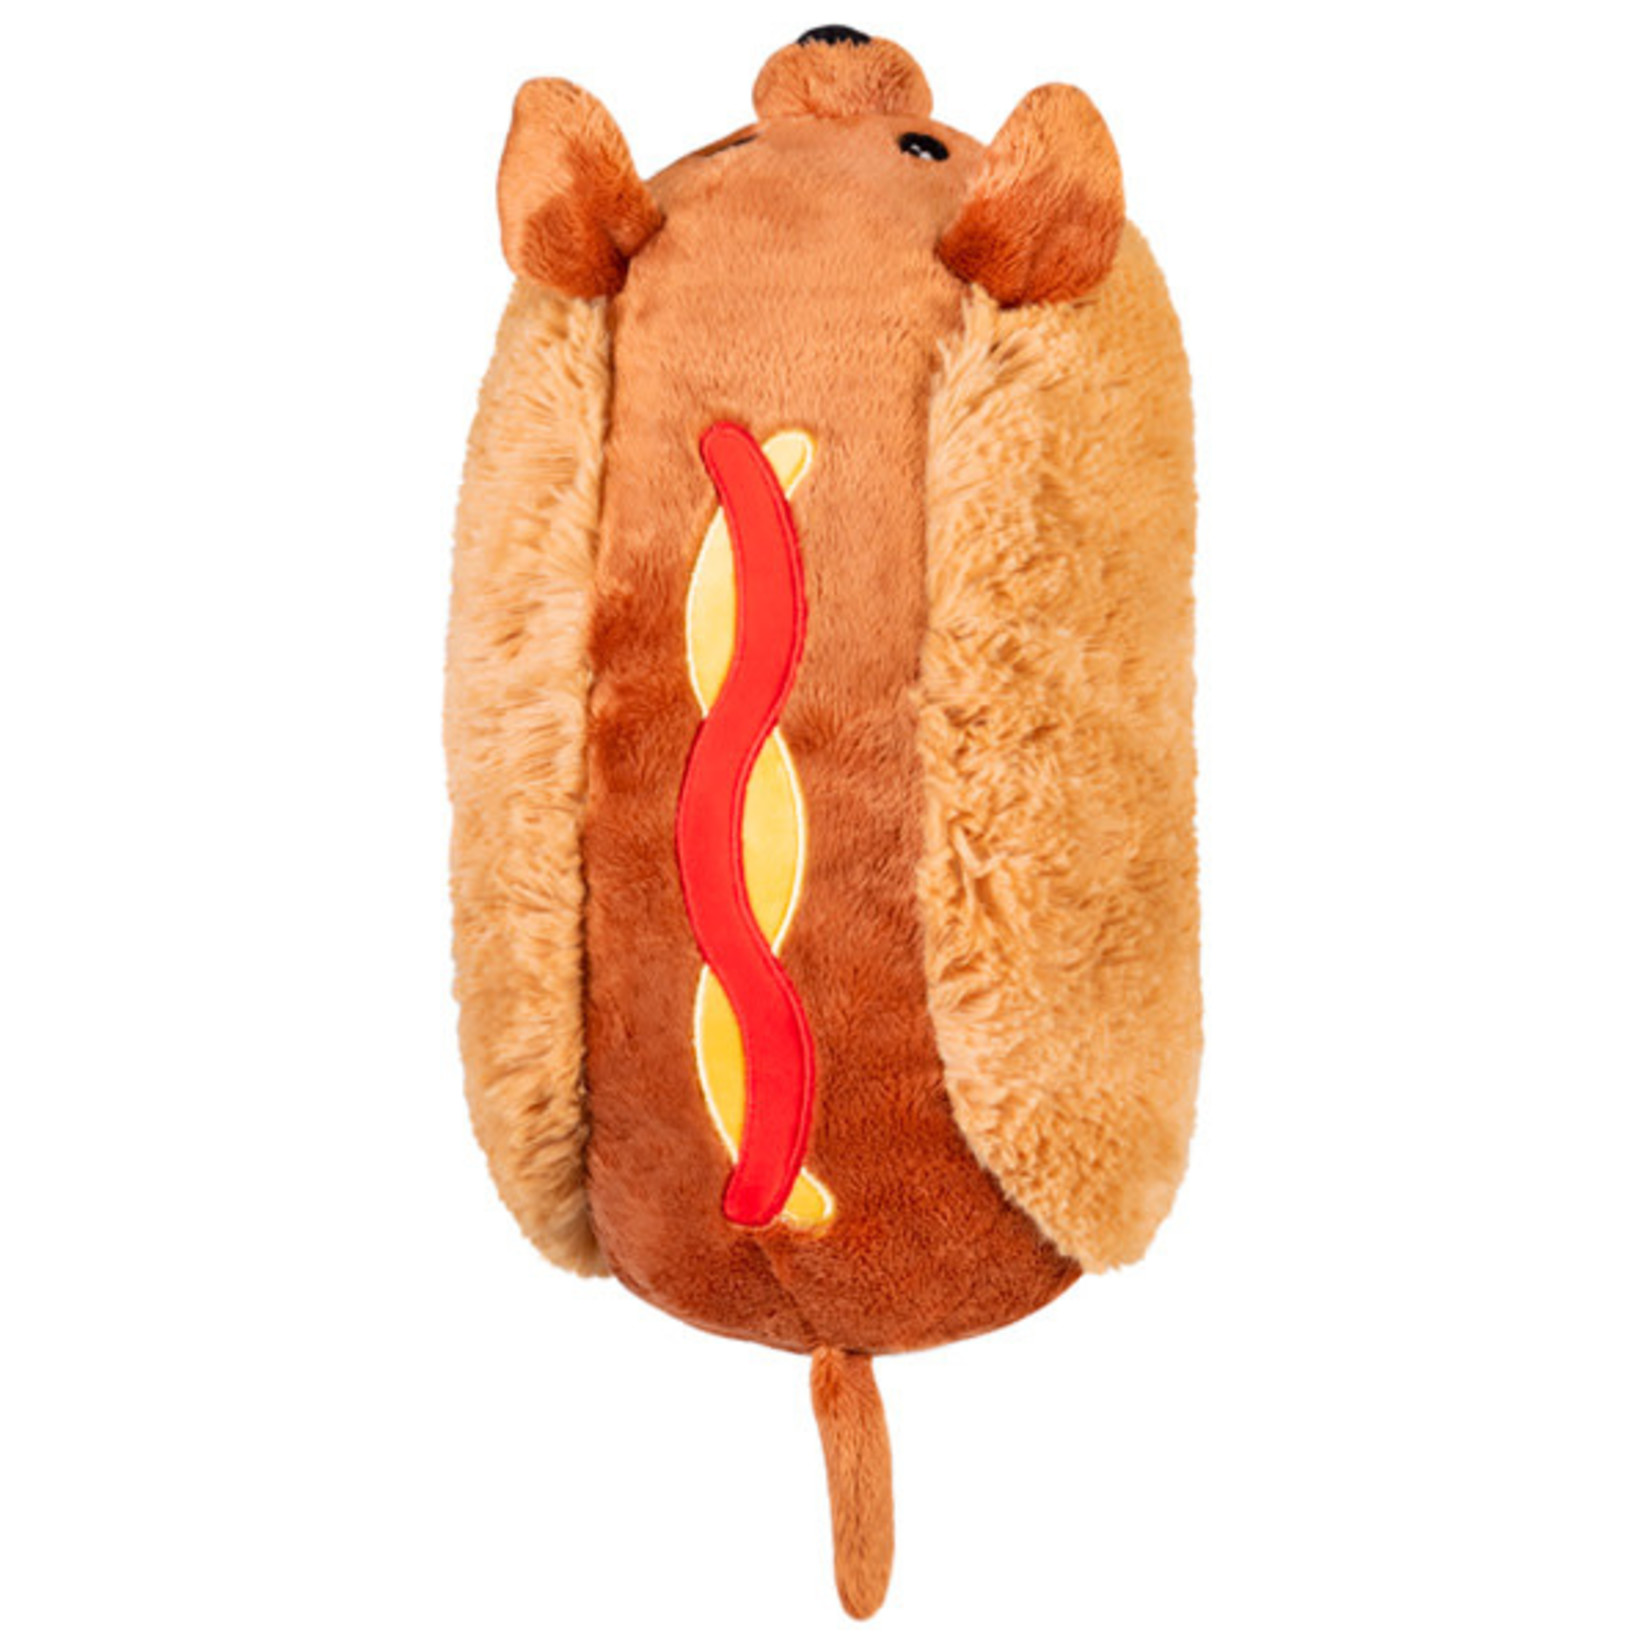 Squishable Mini: Dachshund Hot Dog